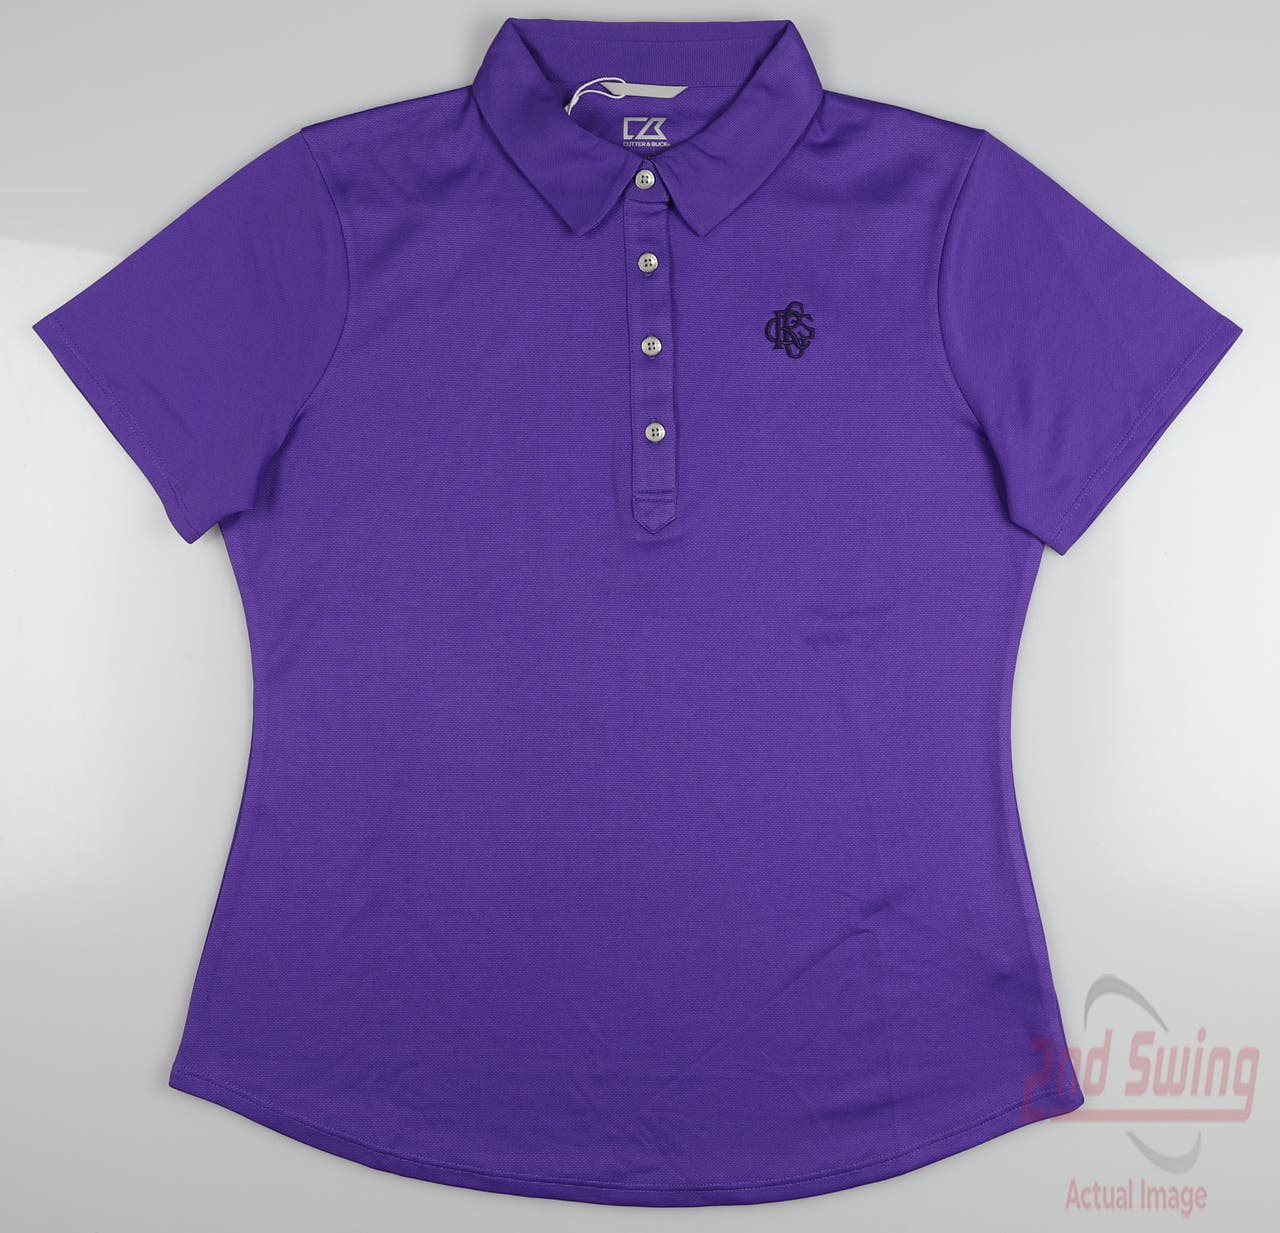 New W/ Logo Womens Cutter & Buck Golf Polo Medium M Purple MSRP $60 LCK08682